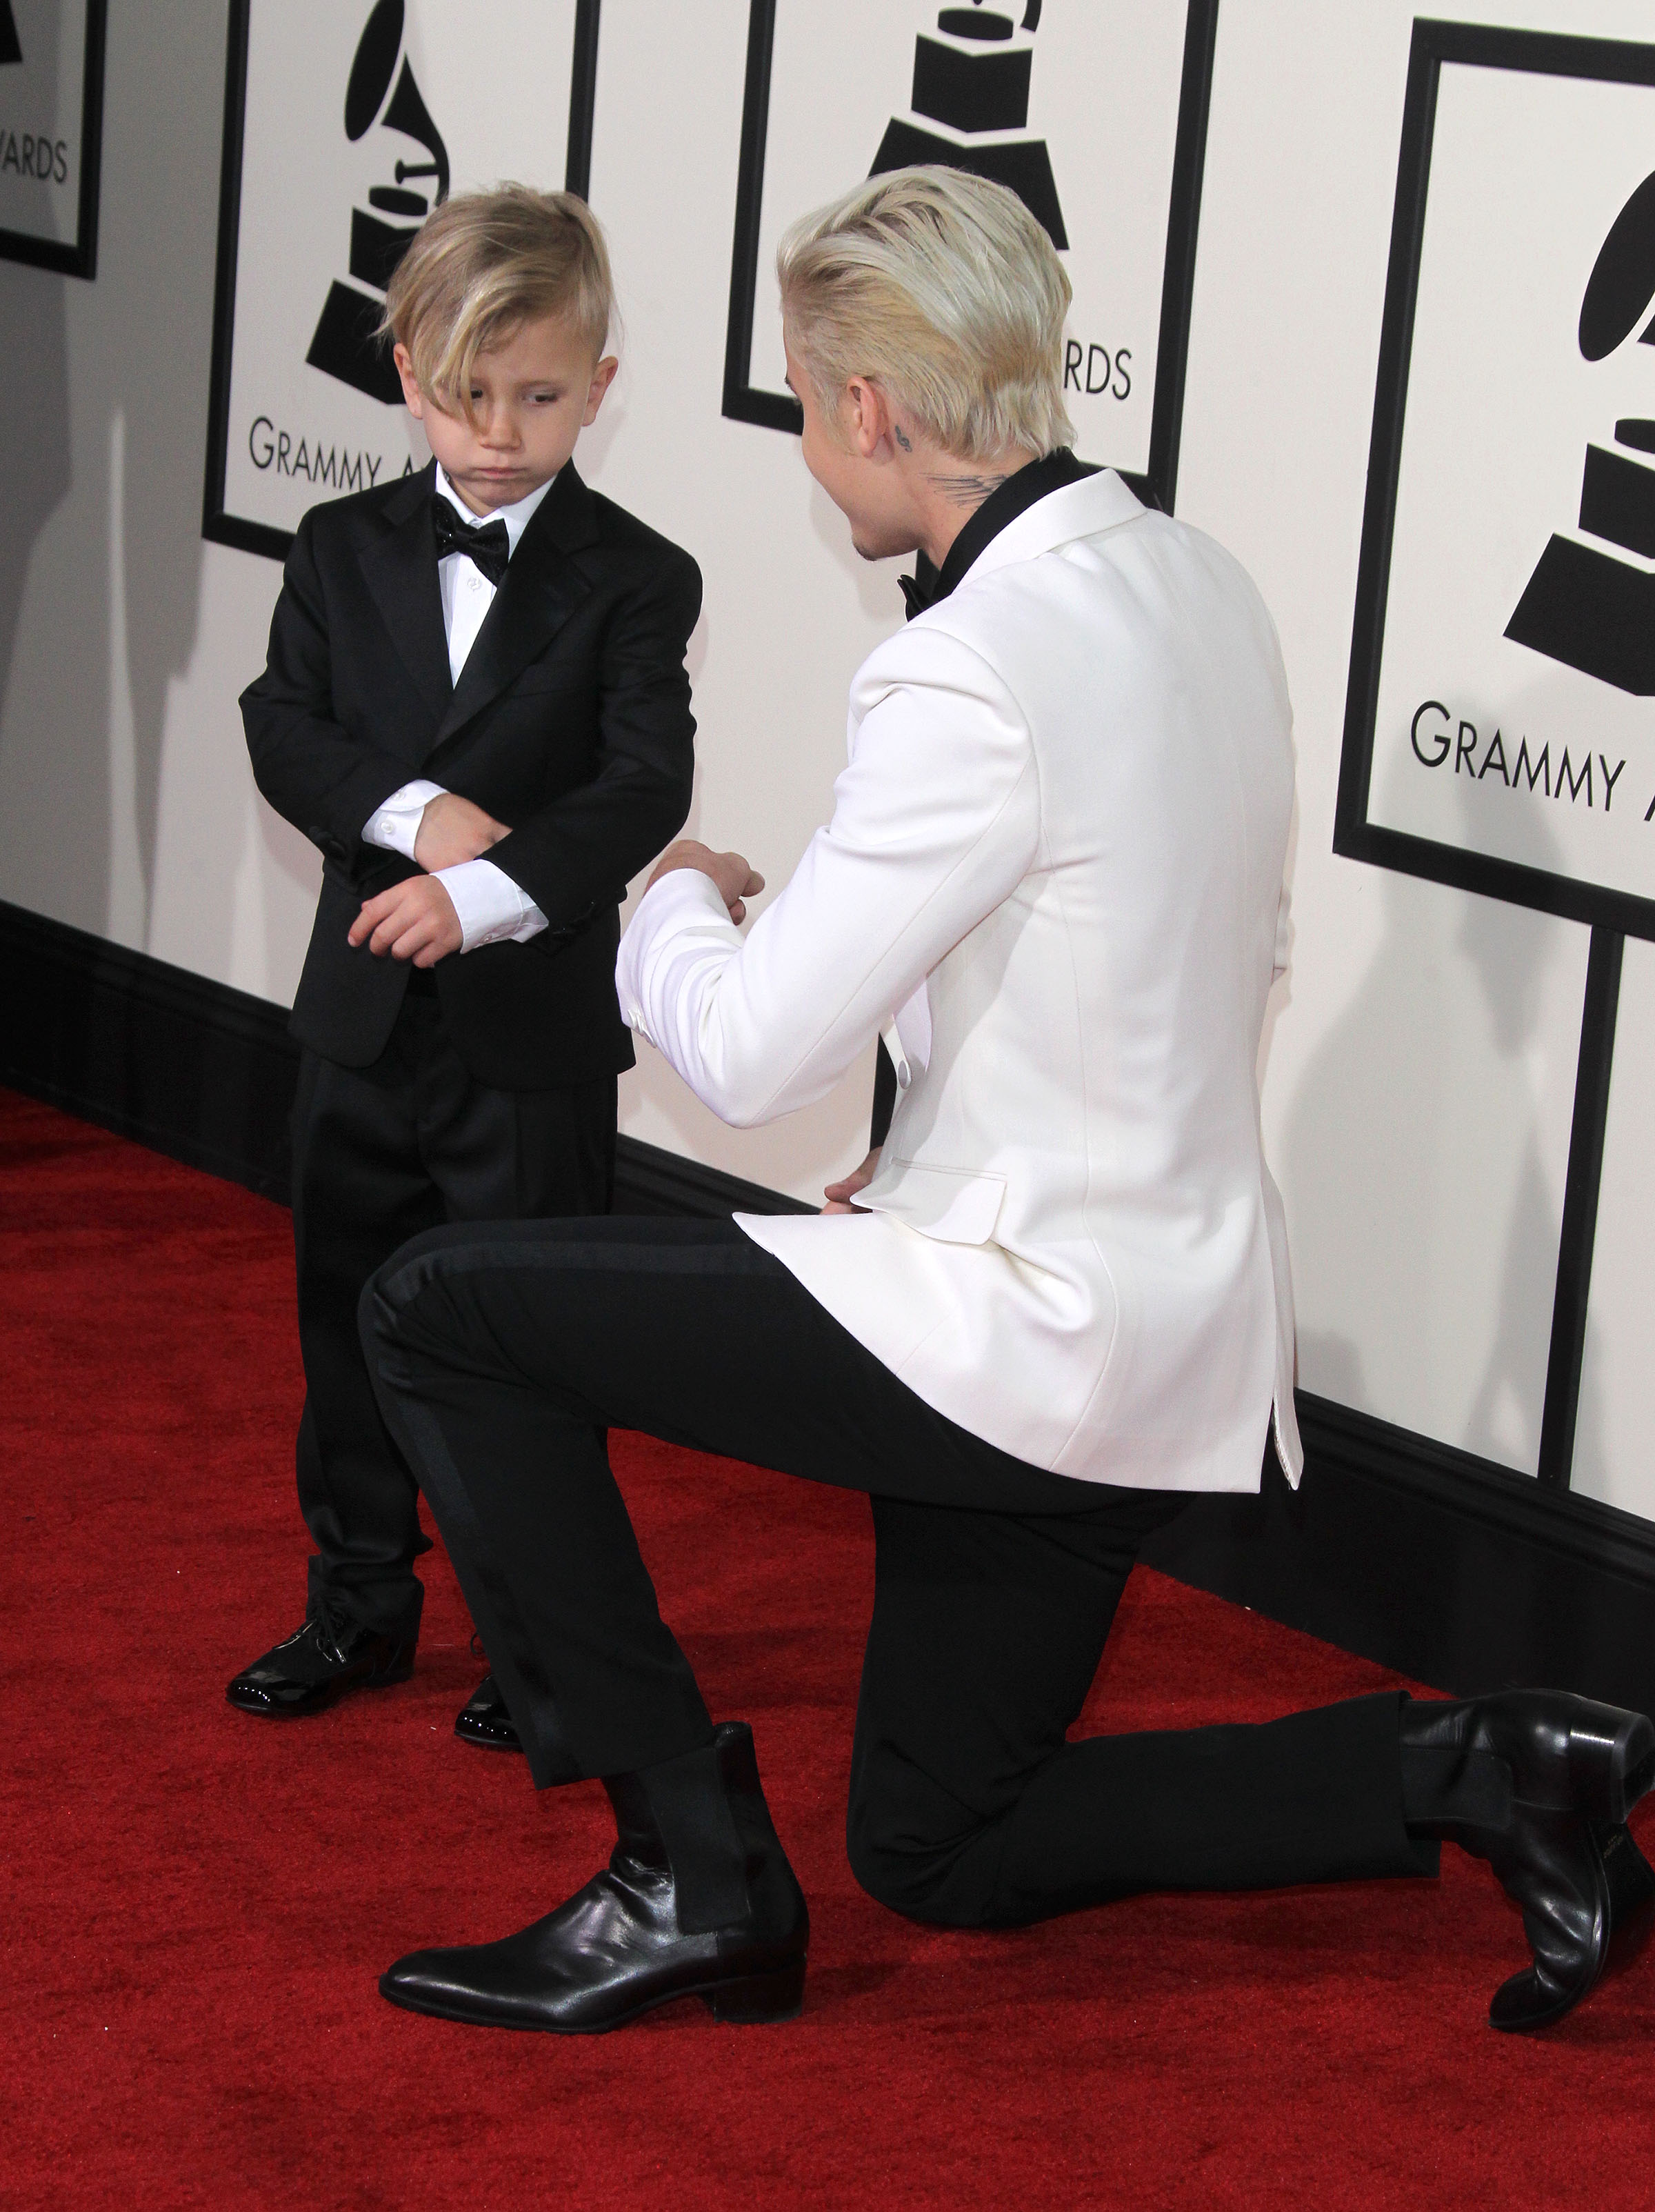 Justin Bieber Oversized Suit Grammys Look Twitter Reactions